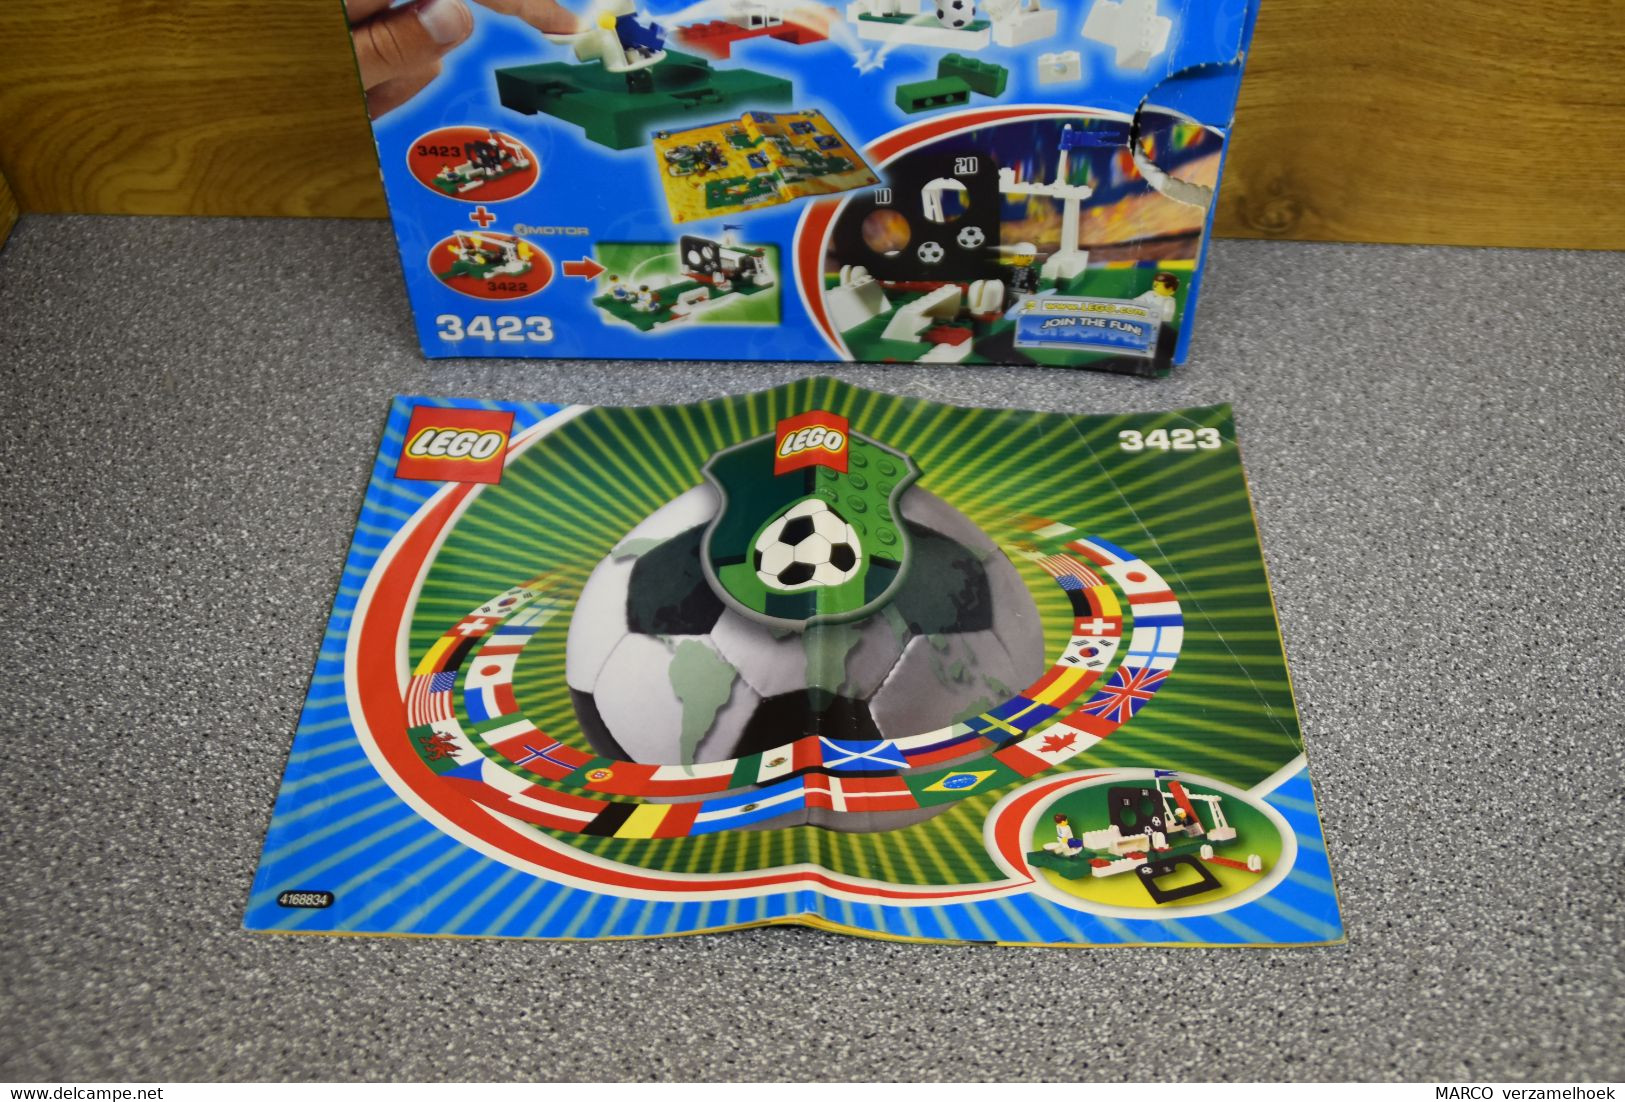 LEGO bouwdoos 3423 voetbal-football-soccer-Fußball